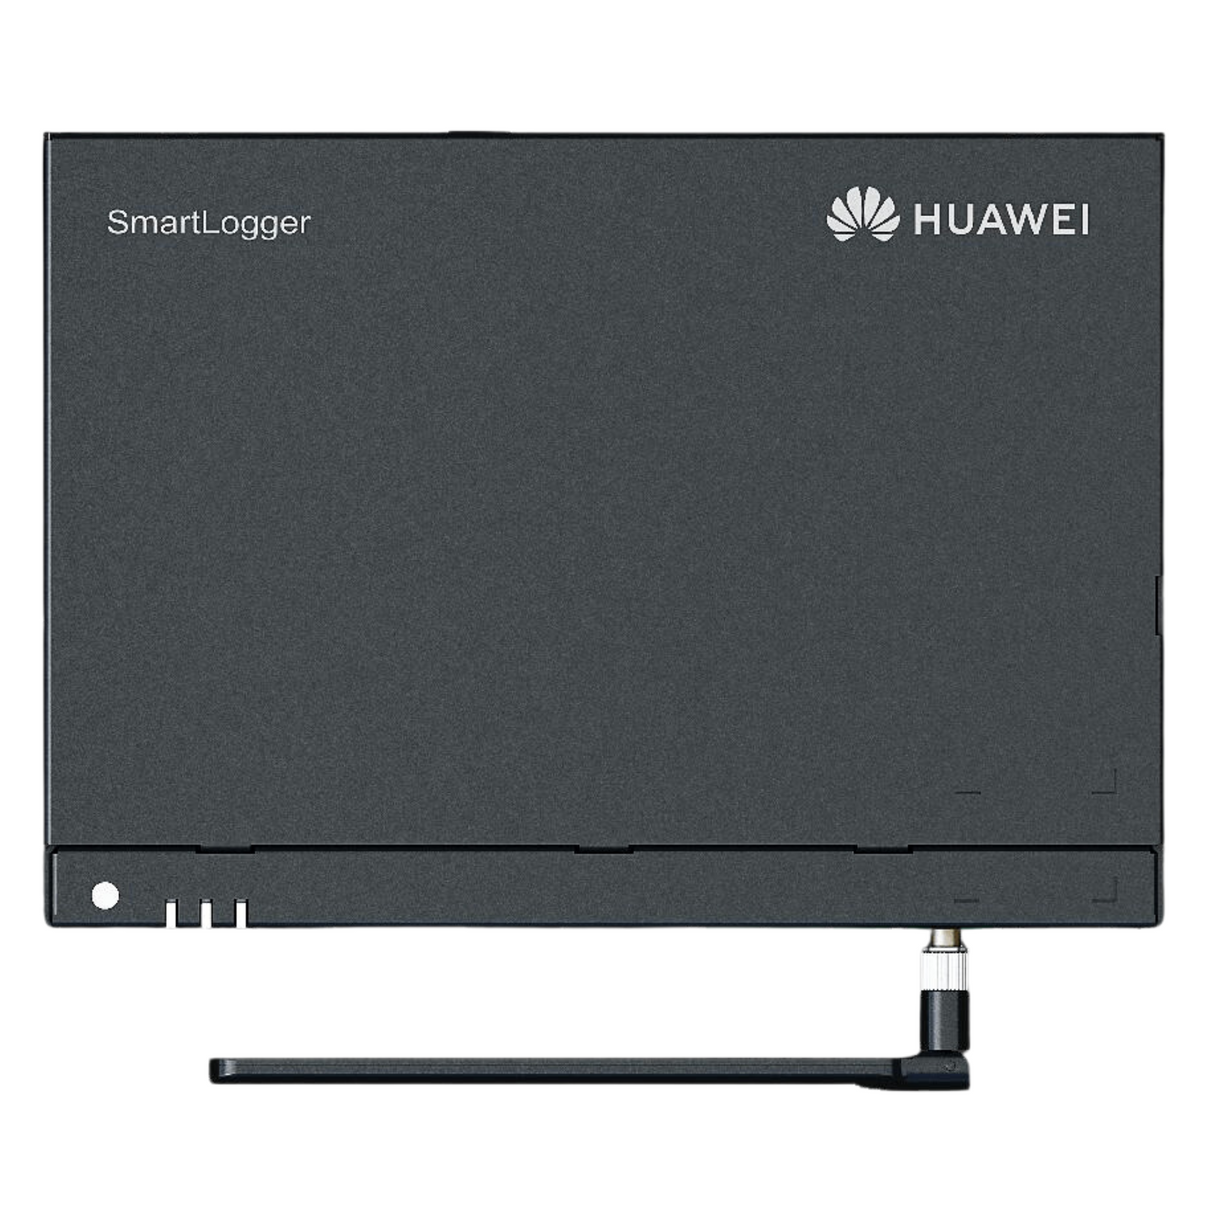 HUAWEI SmartLogger 3000B02EU